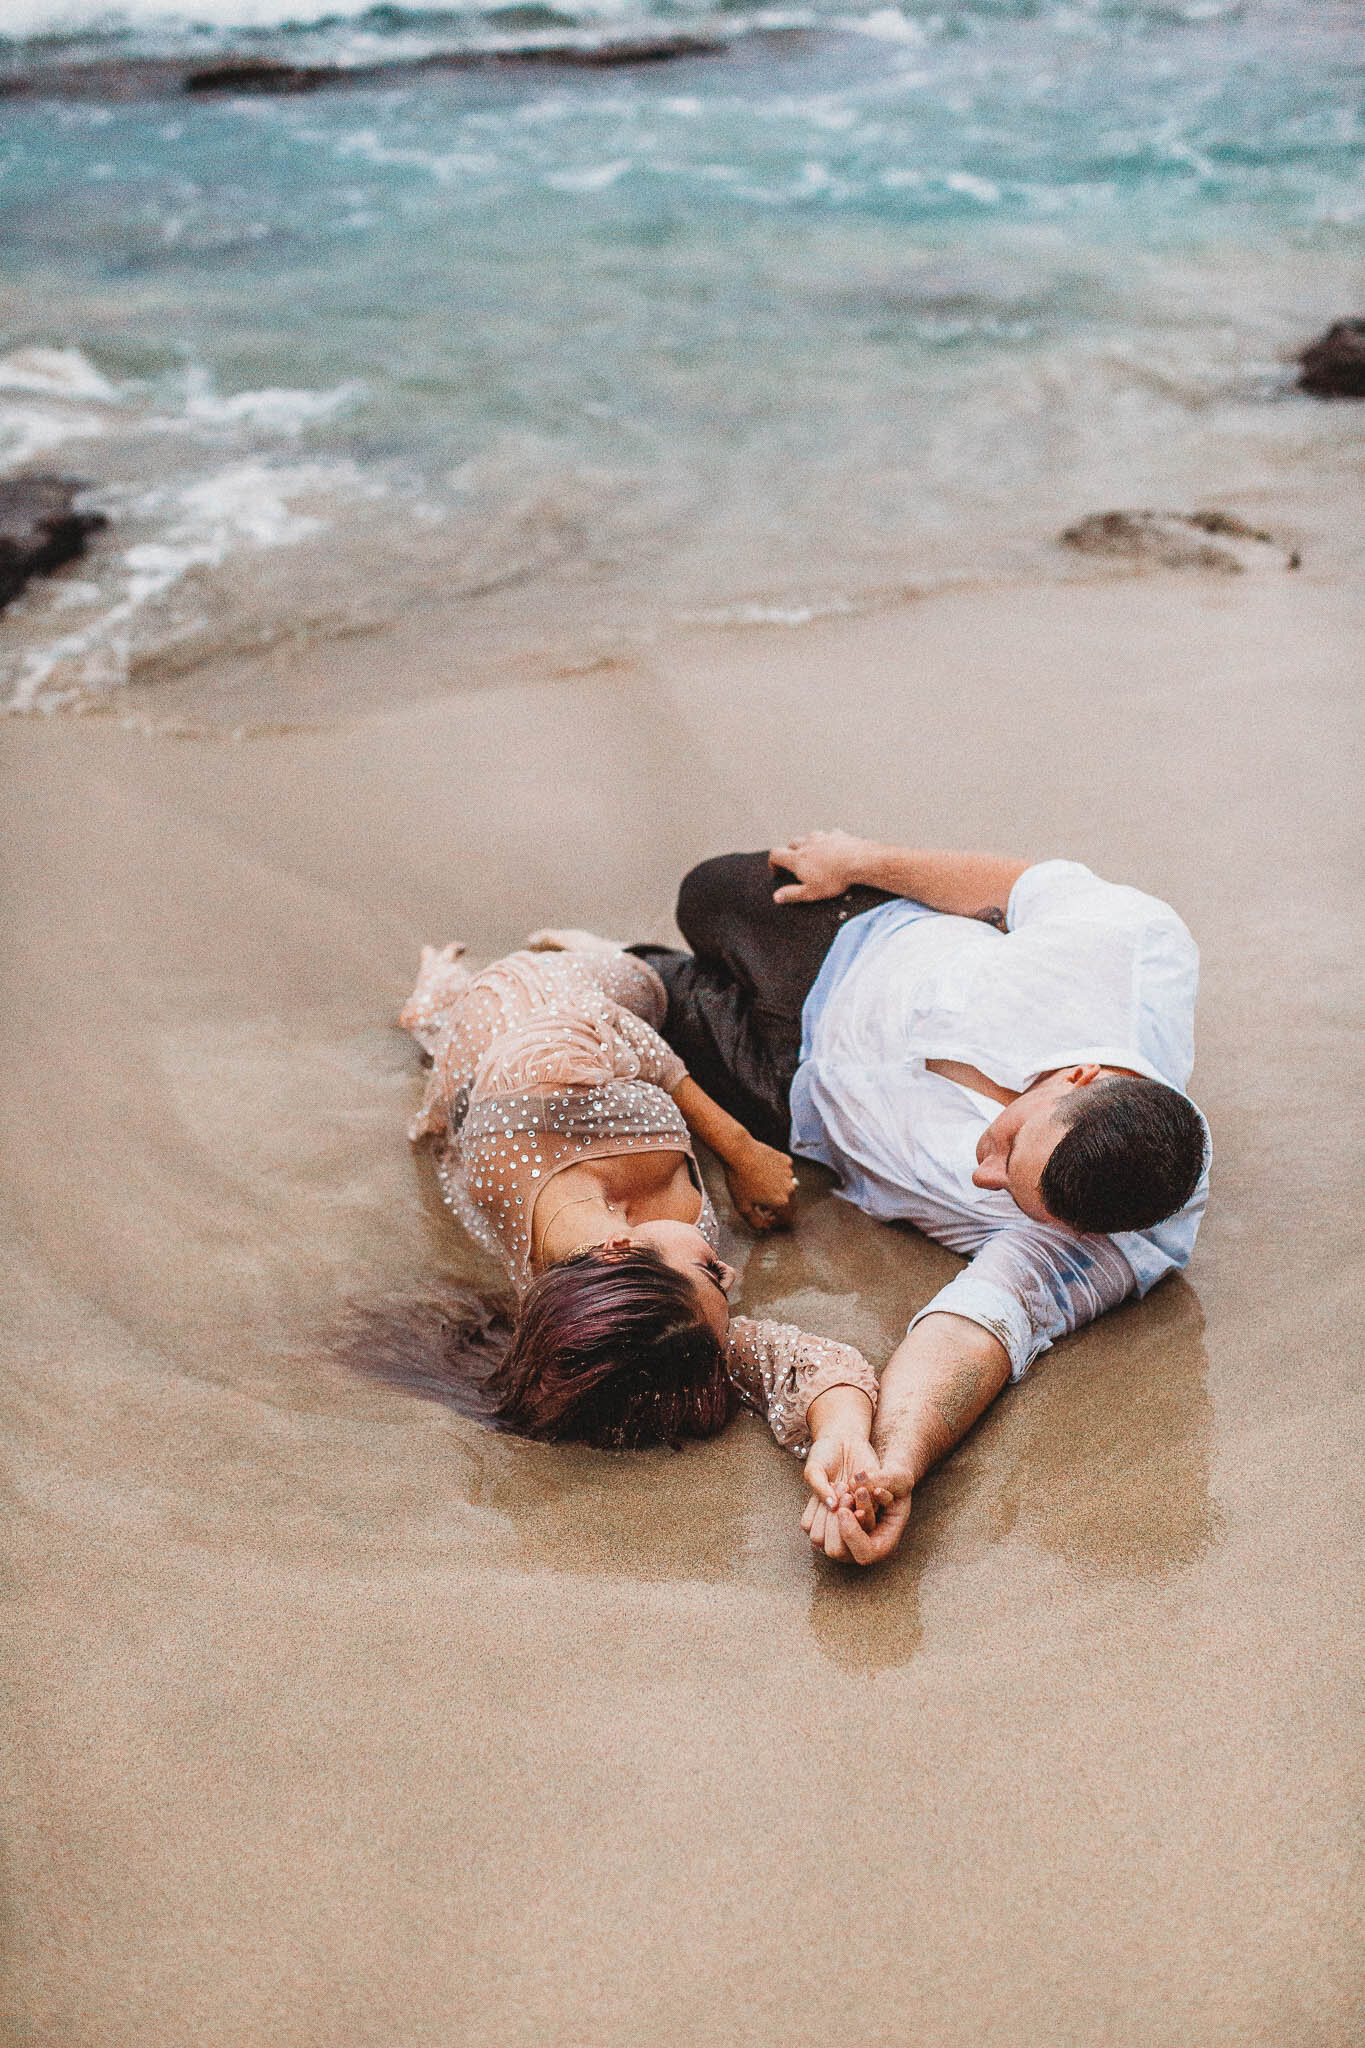 Oahu Hawaii Elopement Photographer - Intimate Beach Weddings - Boho